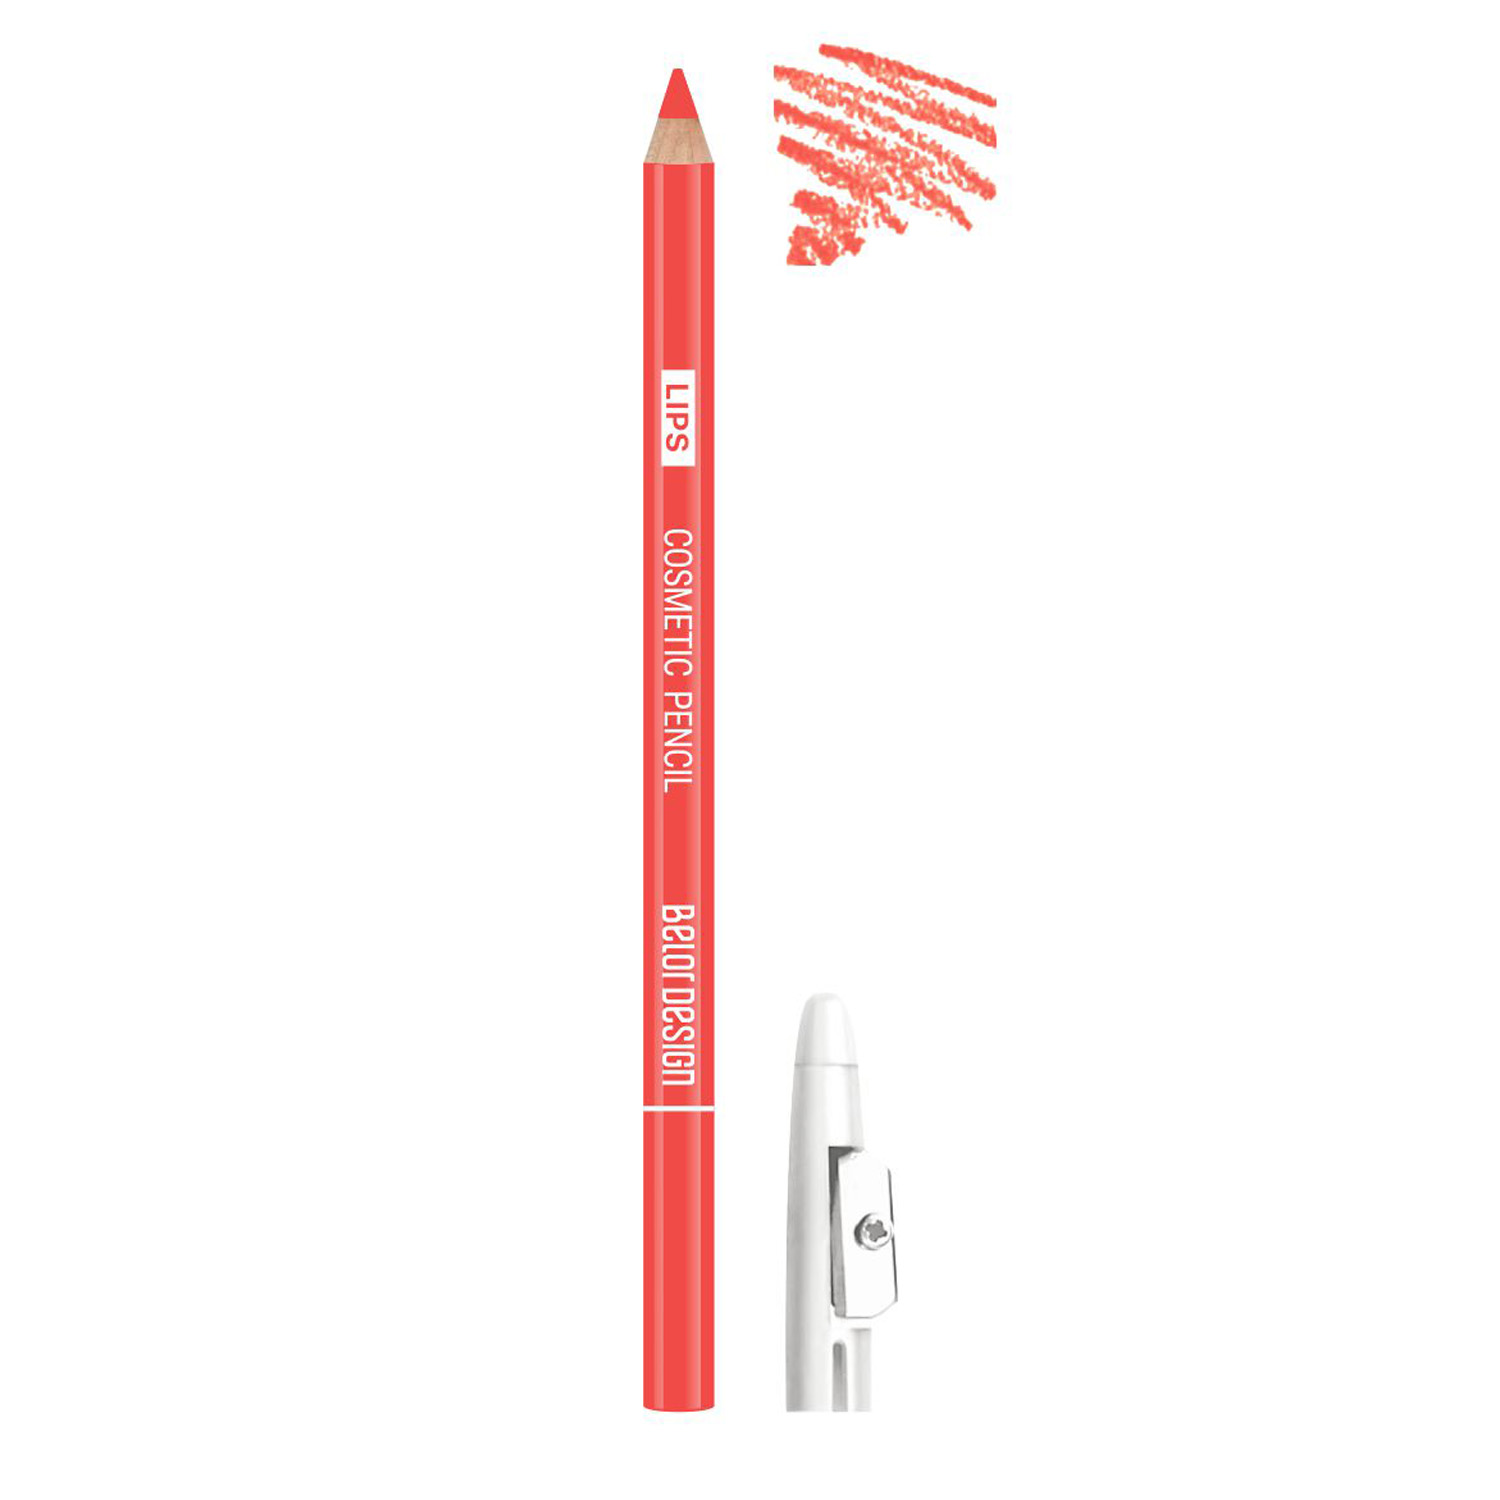 Контурный карандаш для губ Belor Design PARTY, 1.2 гр. (22 нежный коралл) карандаш косметический контурный для губ тон 22 нежный коралл 1 3г